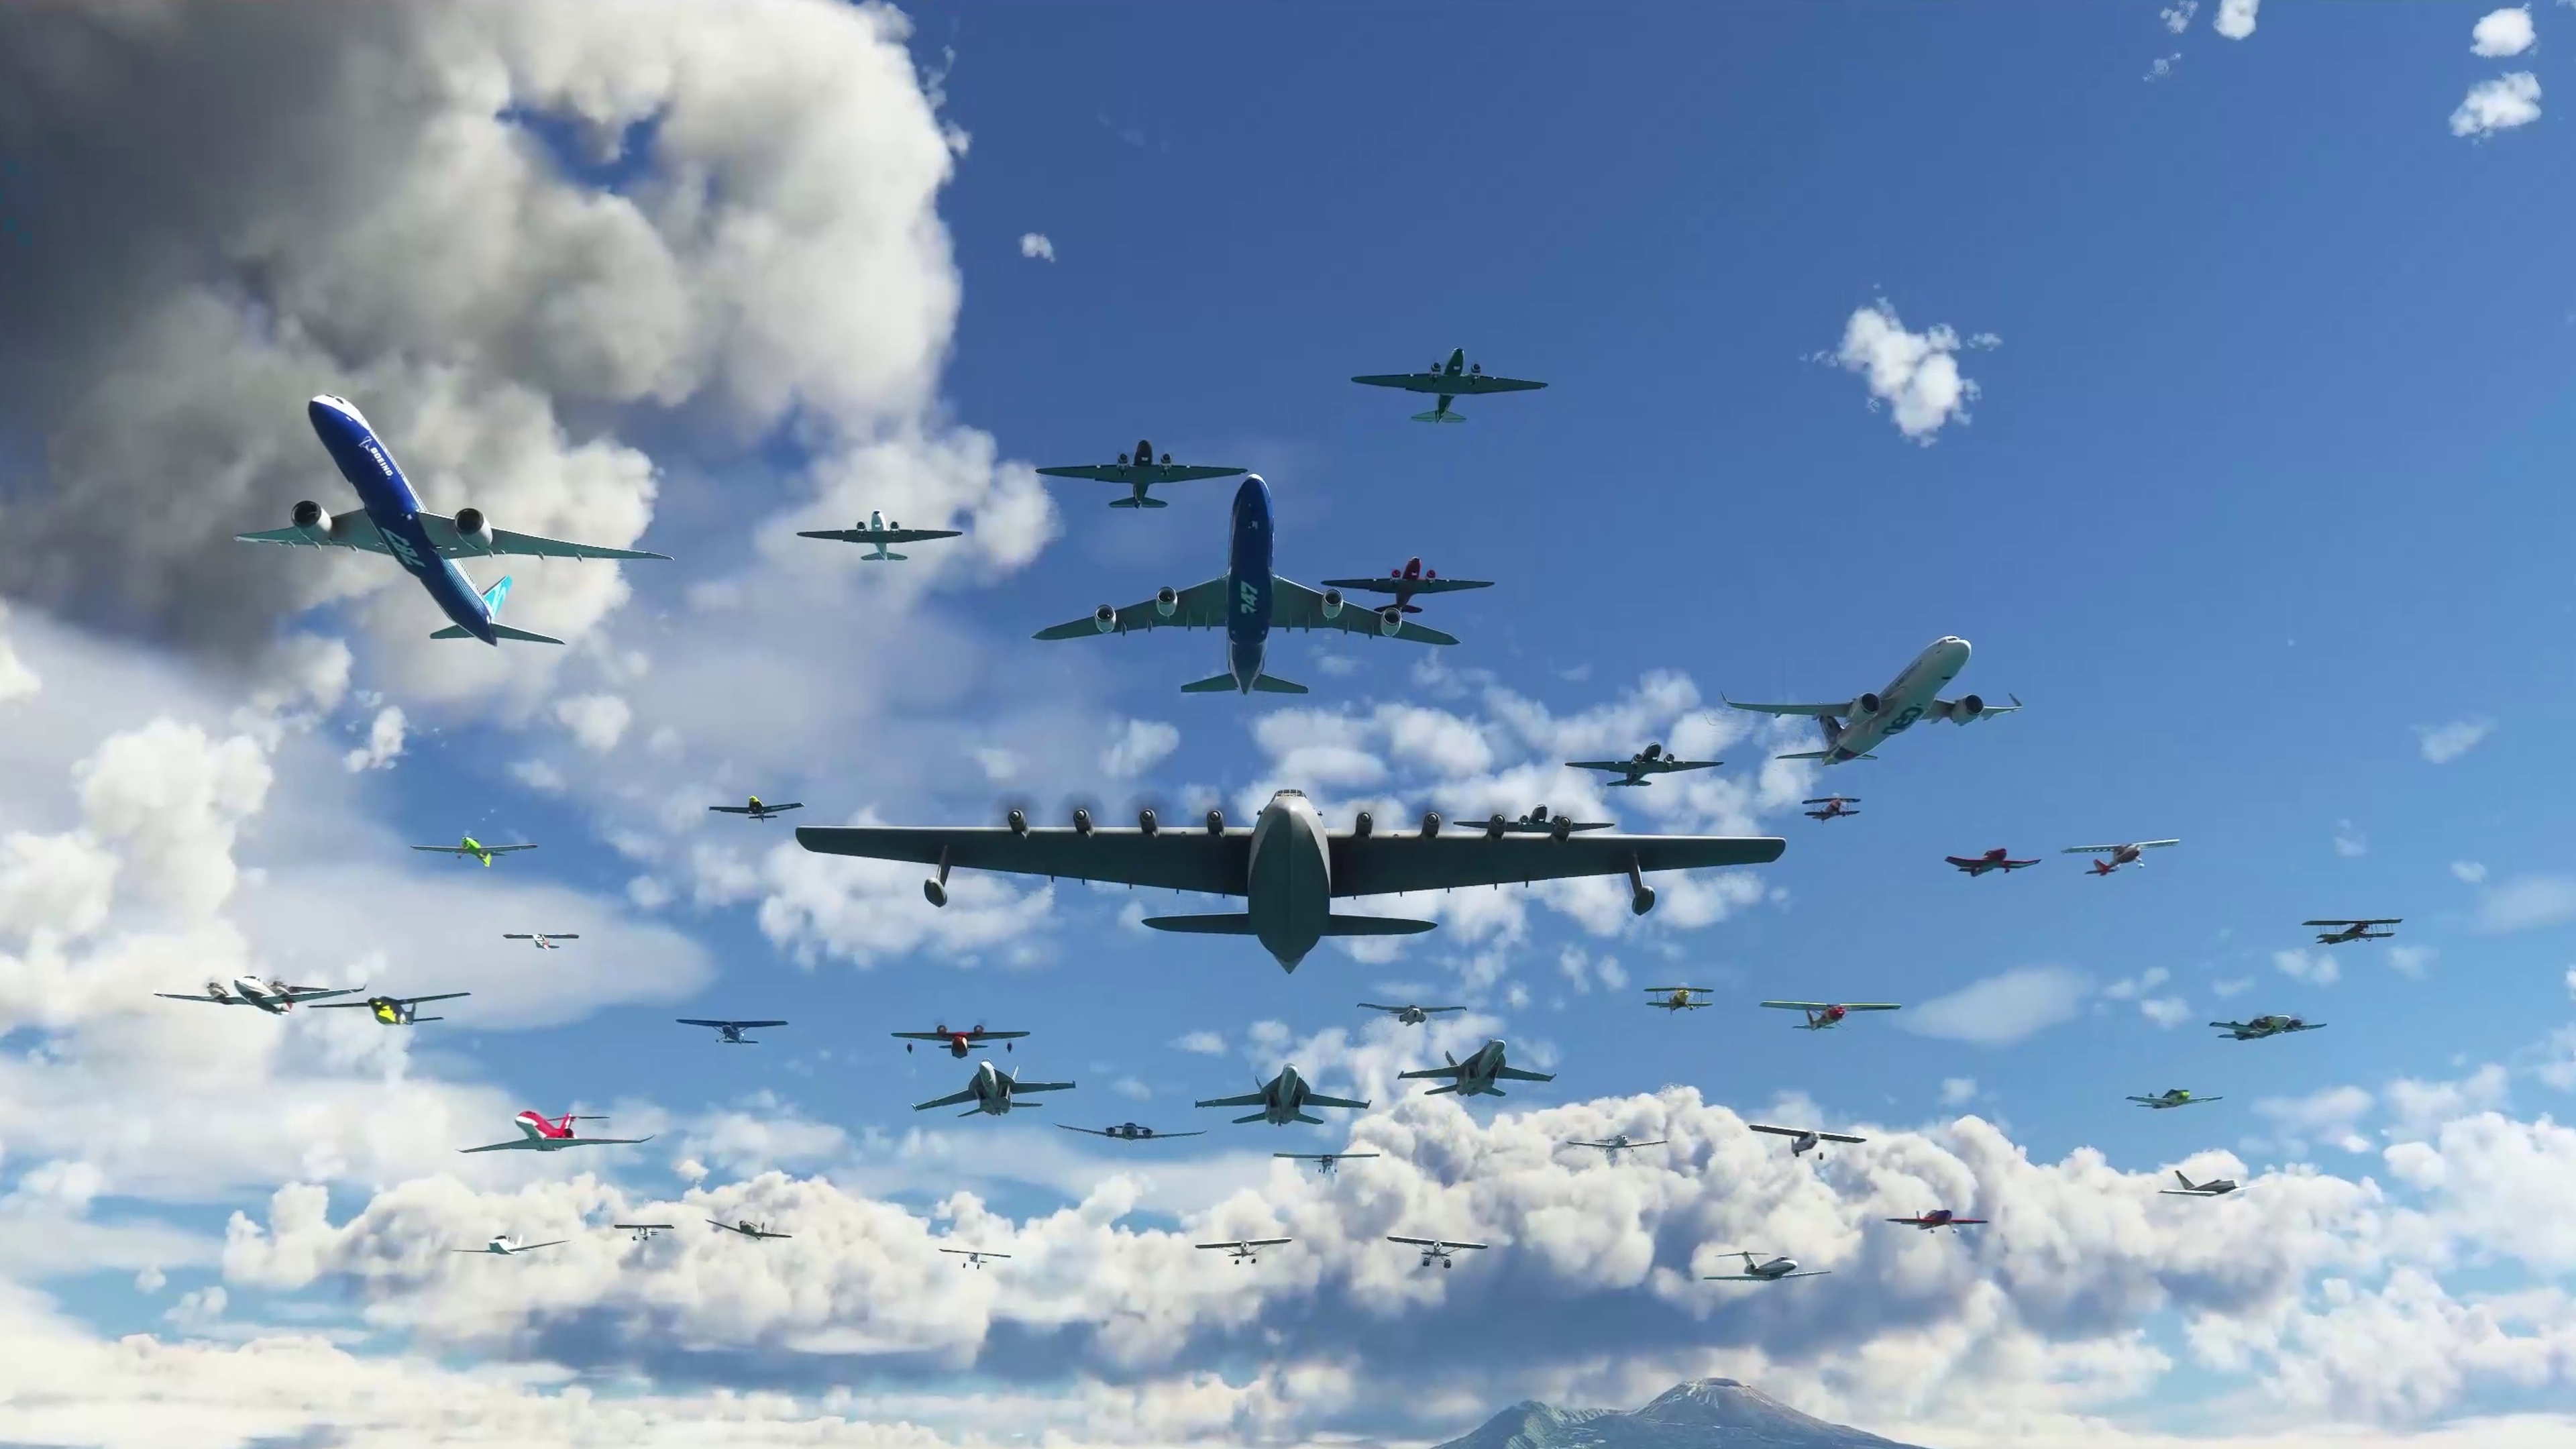 Microsoft Flight Simulator feiert Jubiläum mit der 40th Anniversary Edition